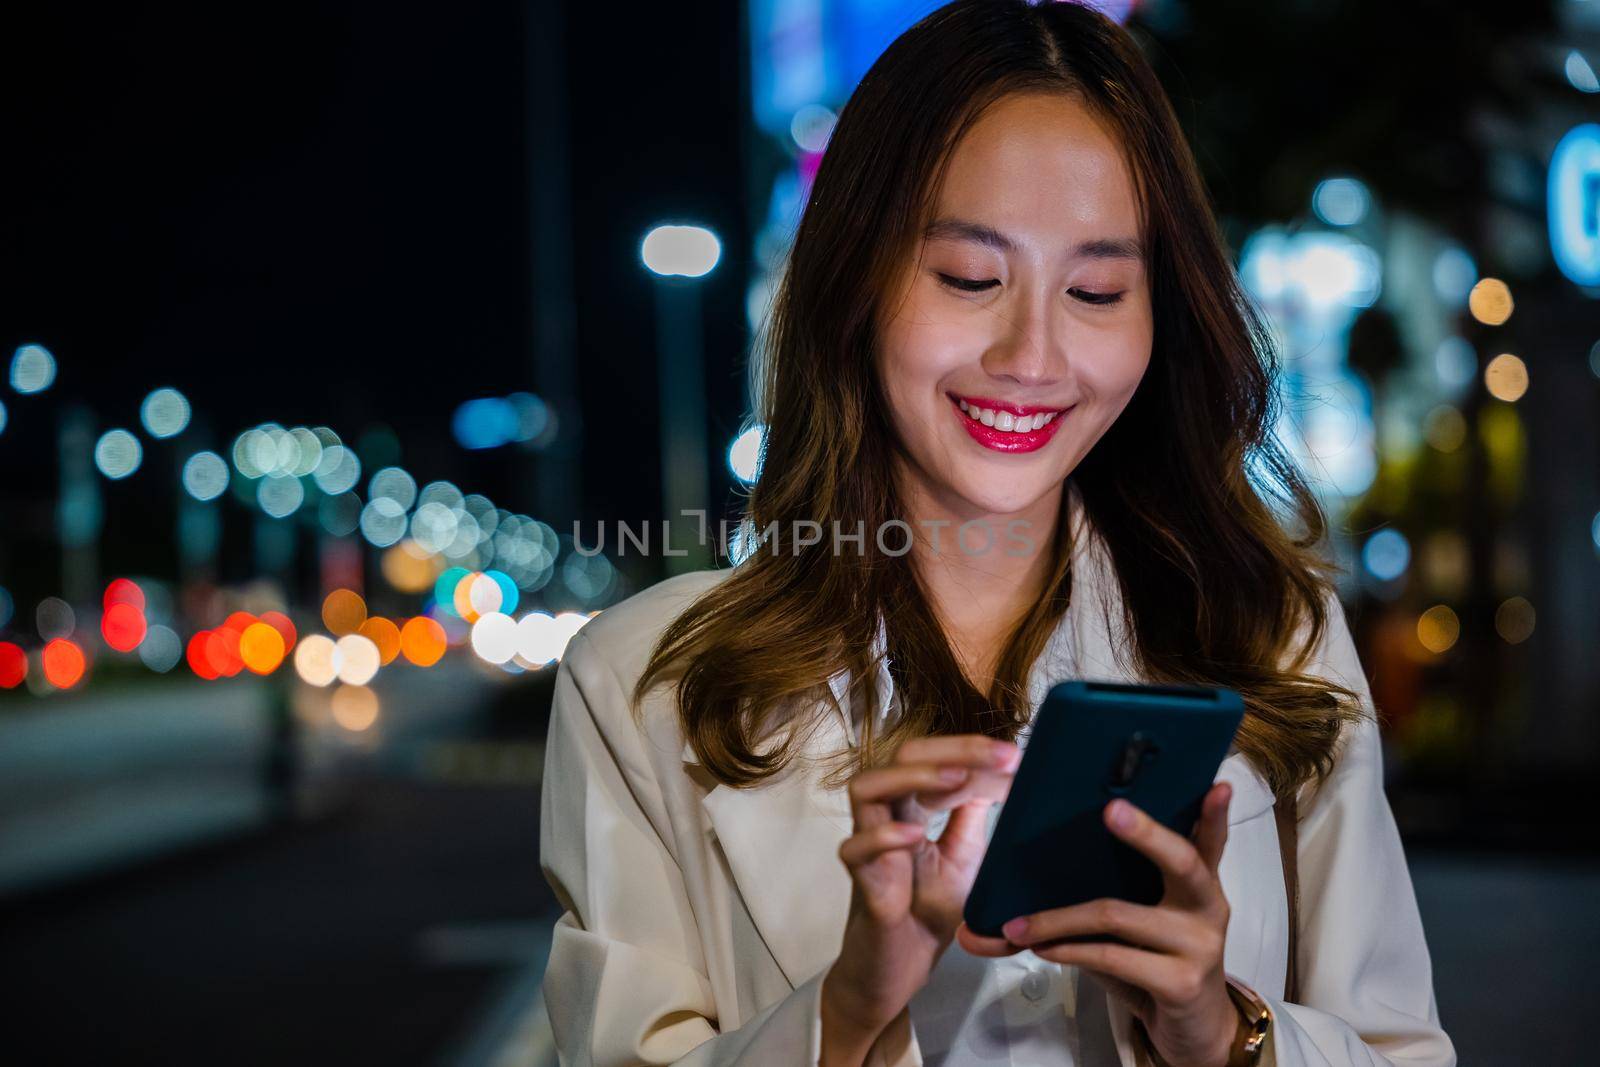 Business woman using mobile phone walking through night city street by Sorapop